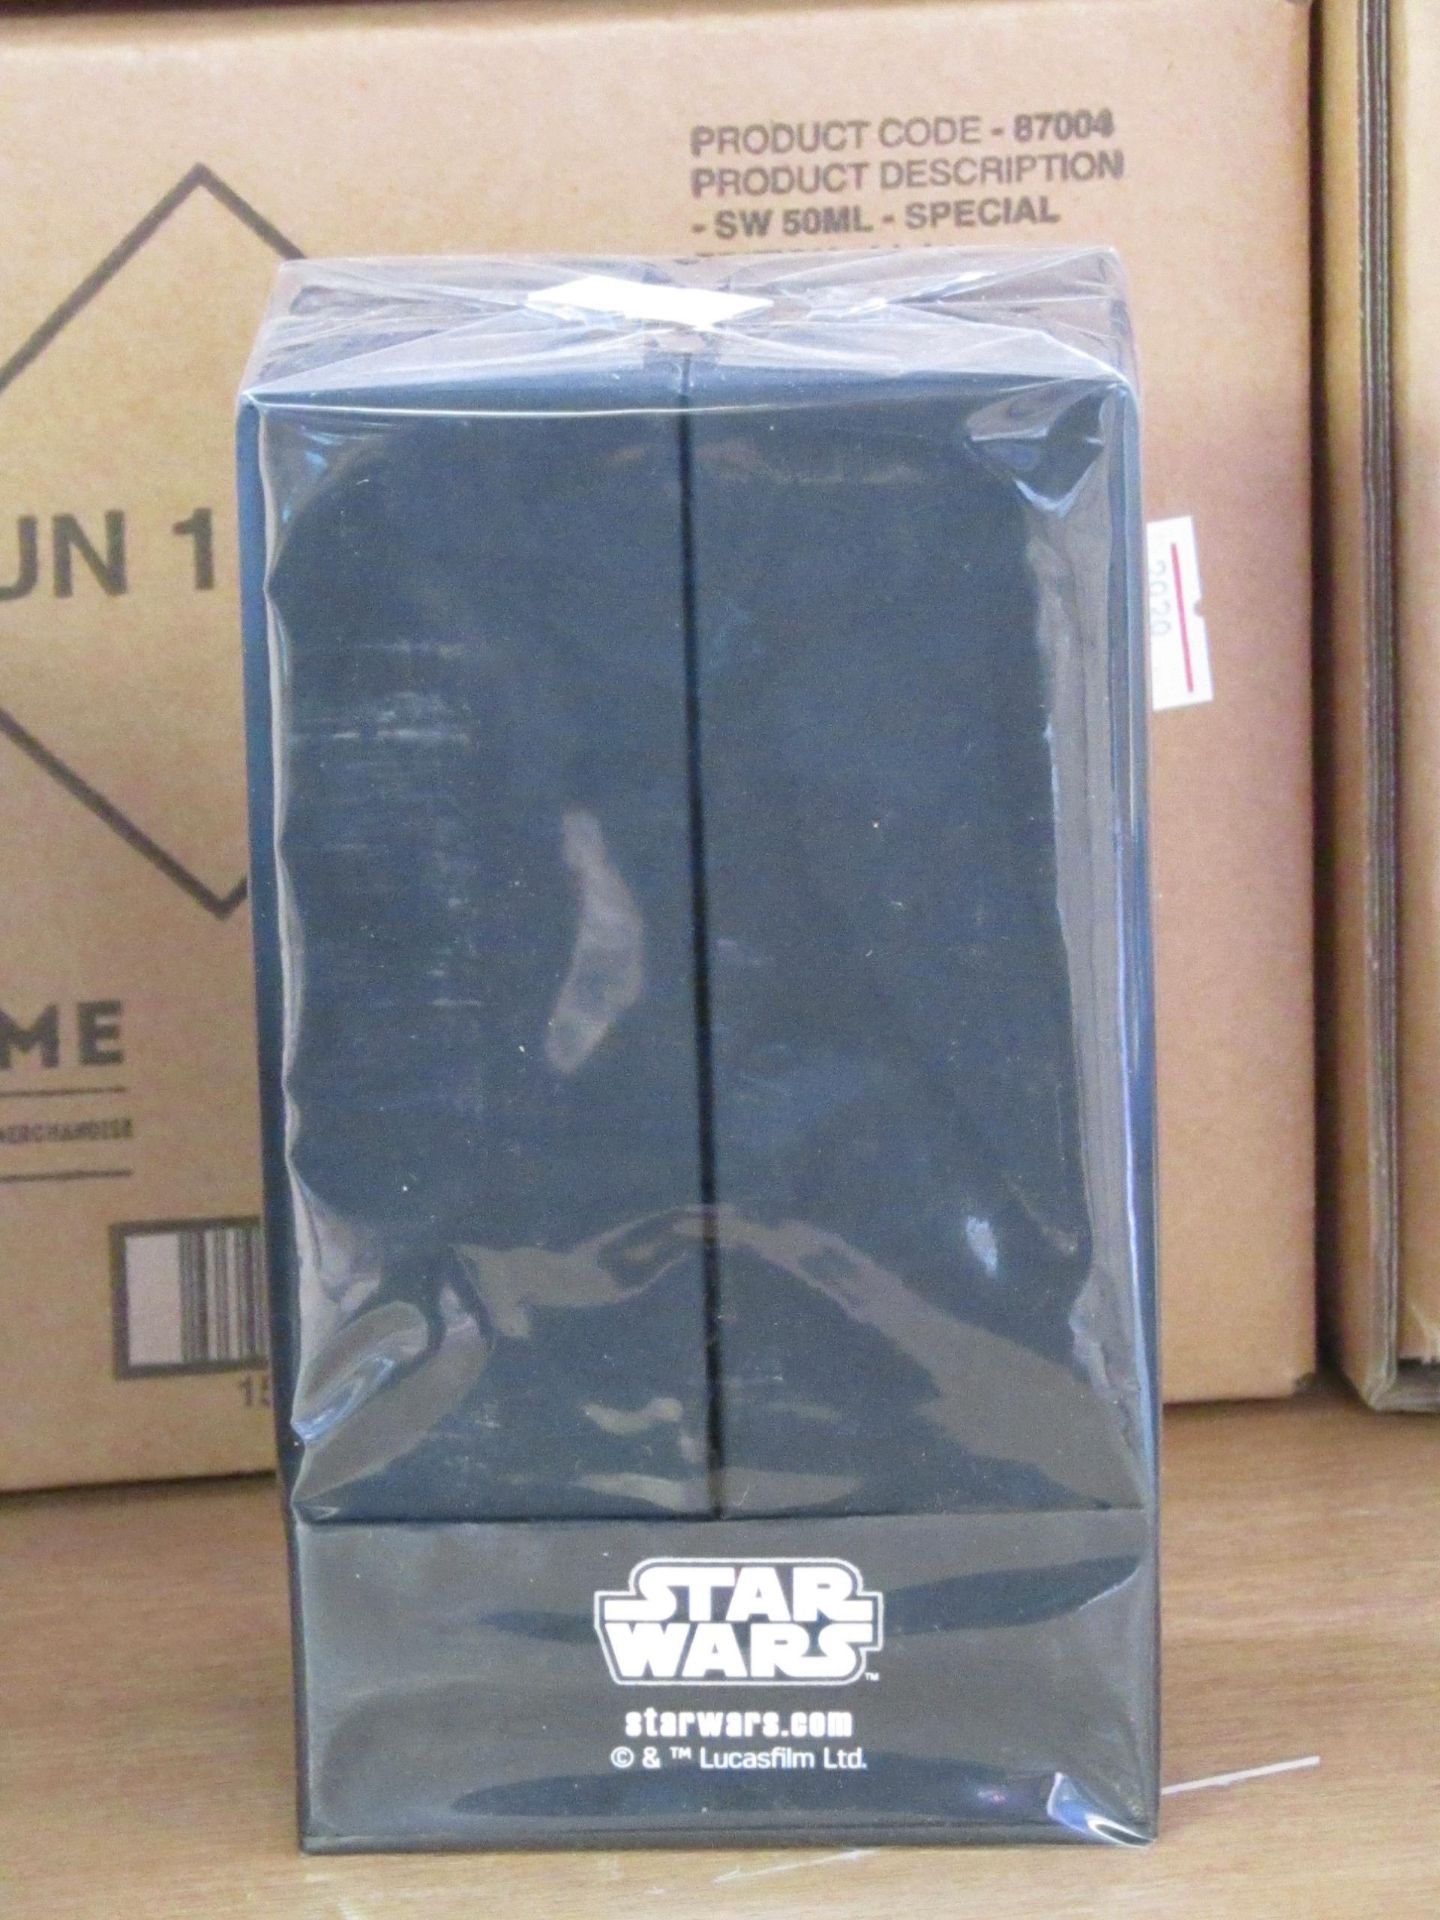 Star Wars Limited Edition Dark Eau De Parfum 50ml new & packaged